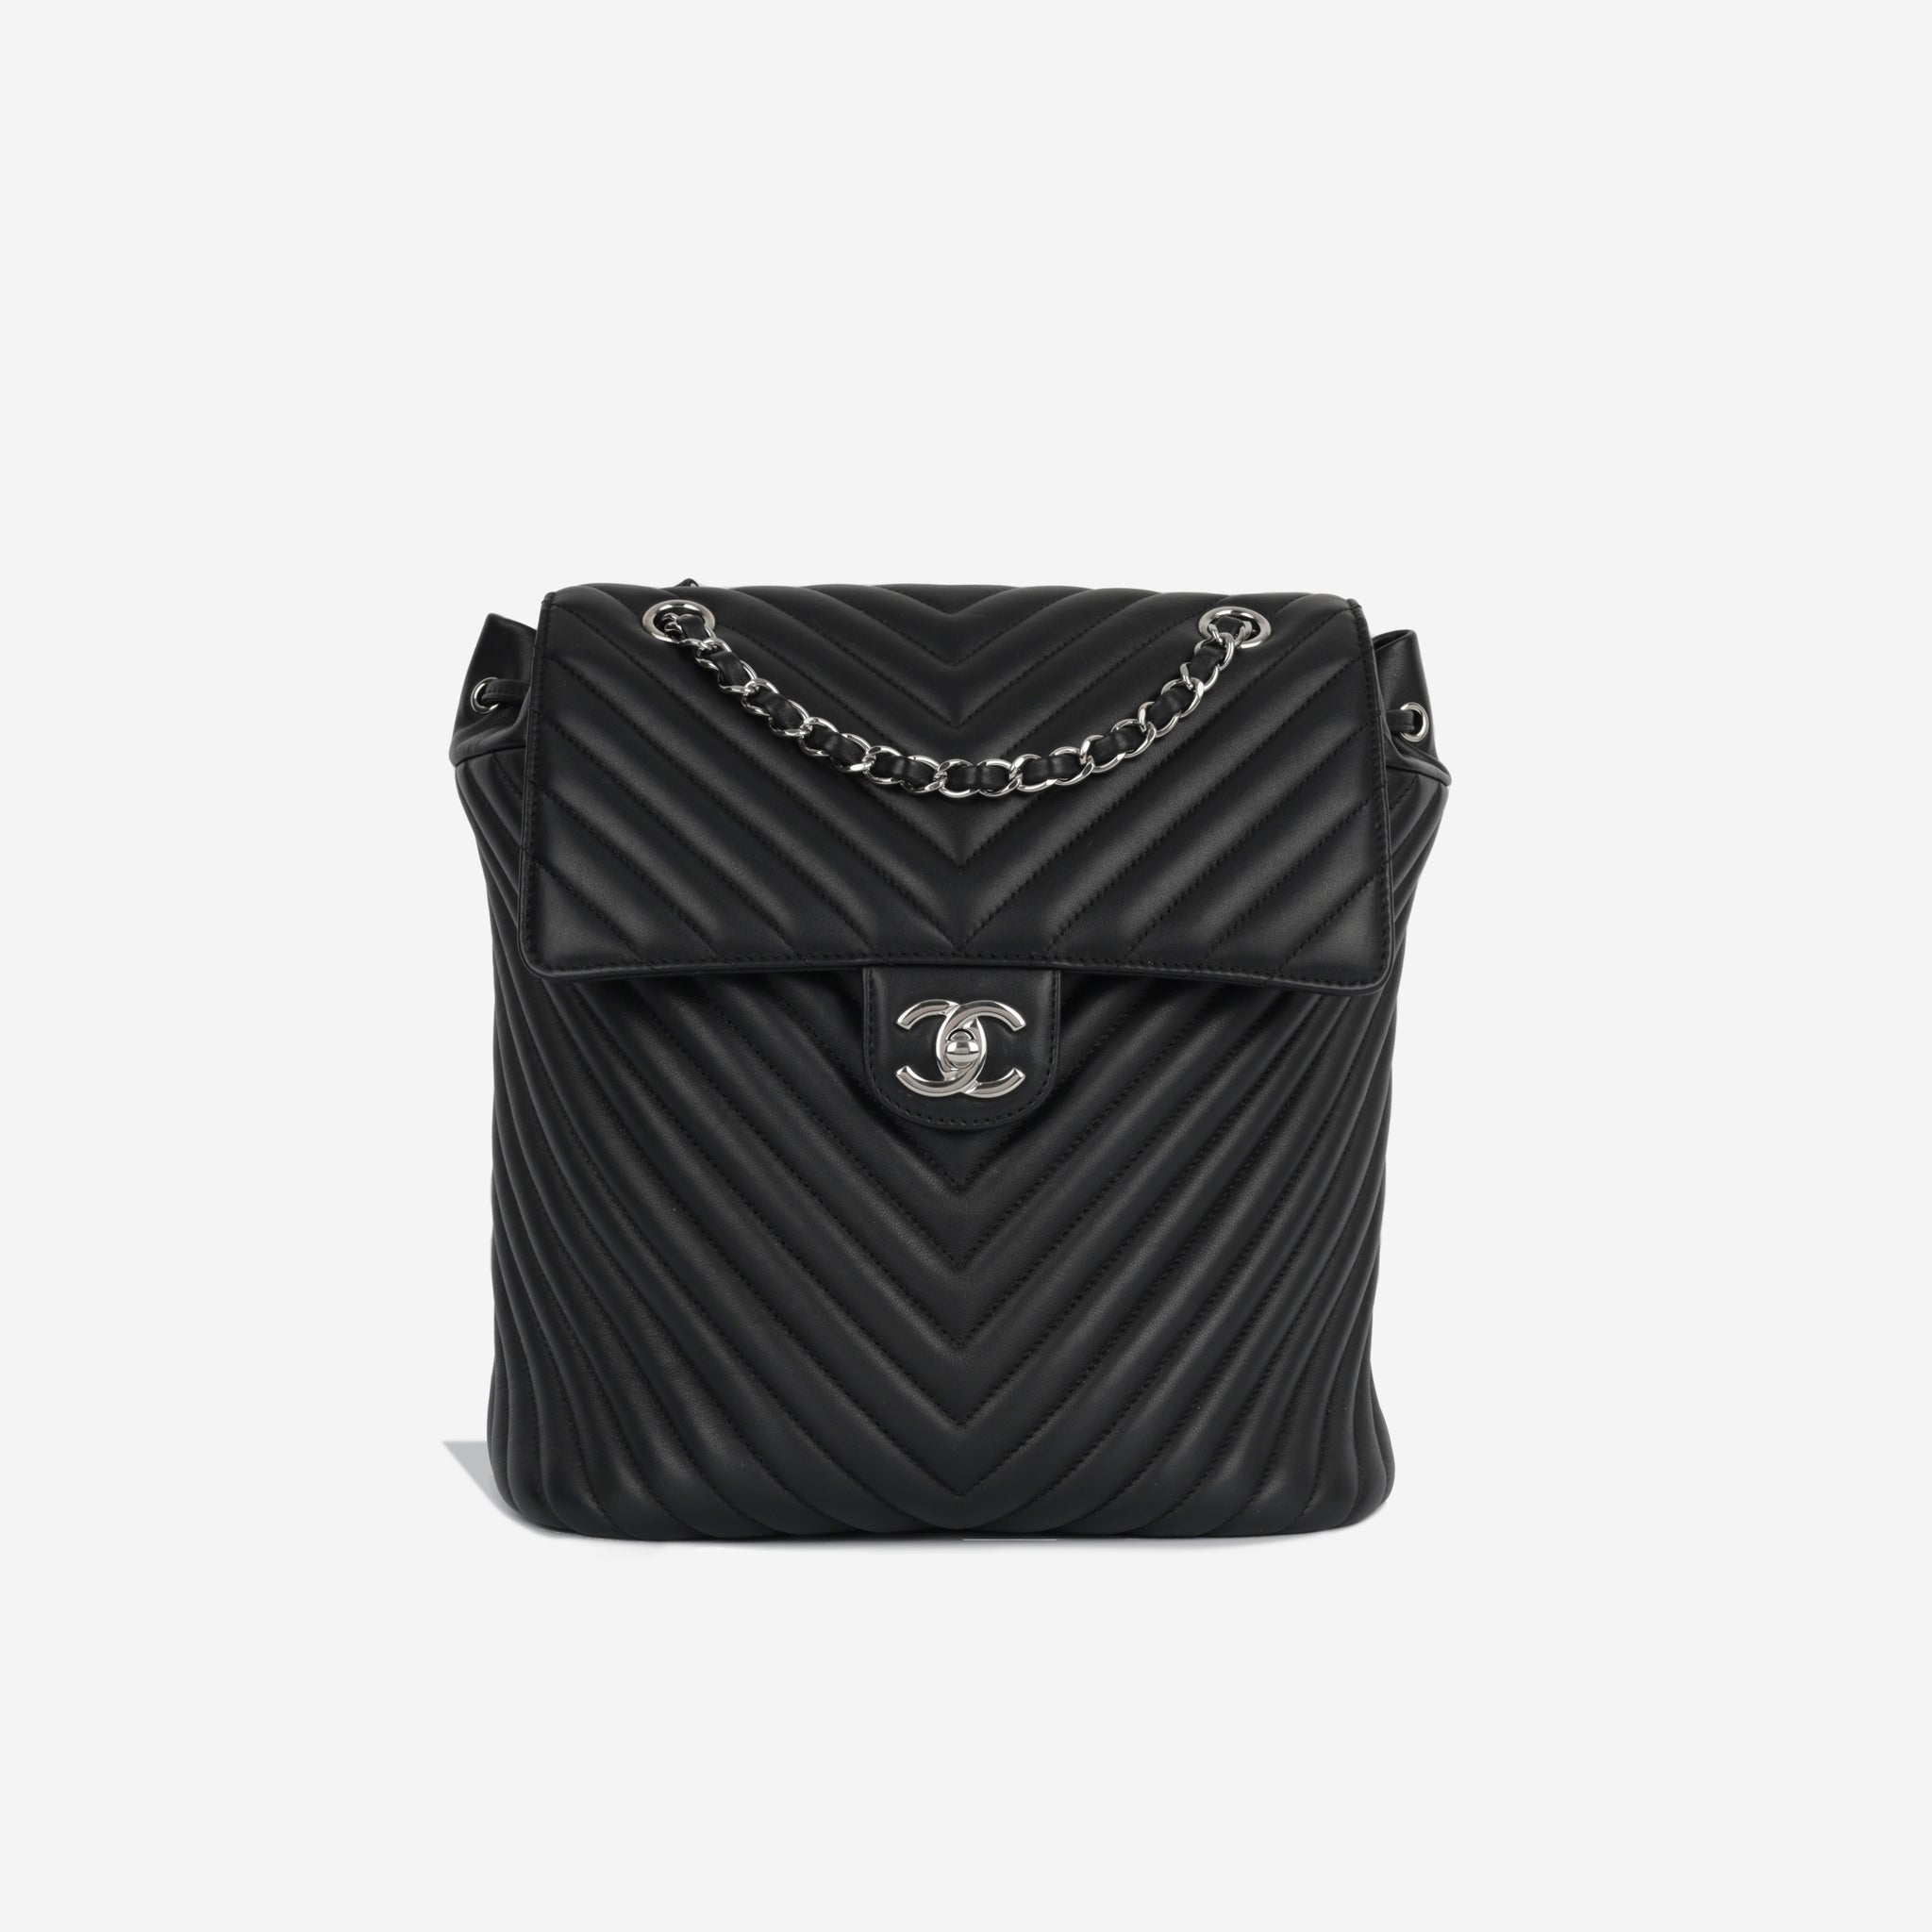 Chanel - Large Urban Spirit Backpack - Black Lambskin SHW - 2018